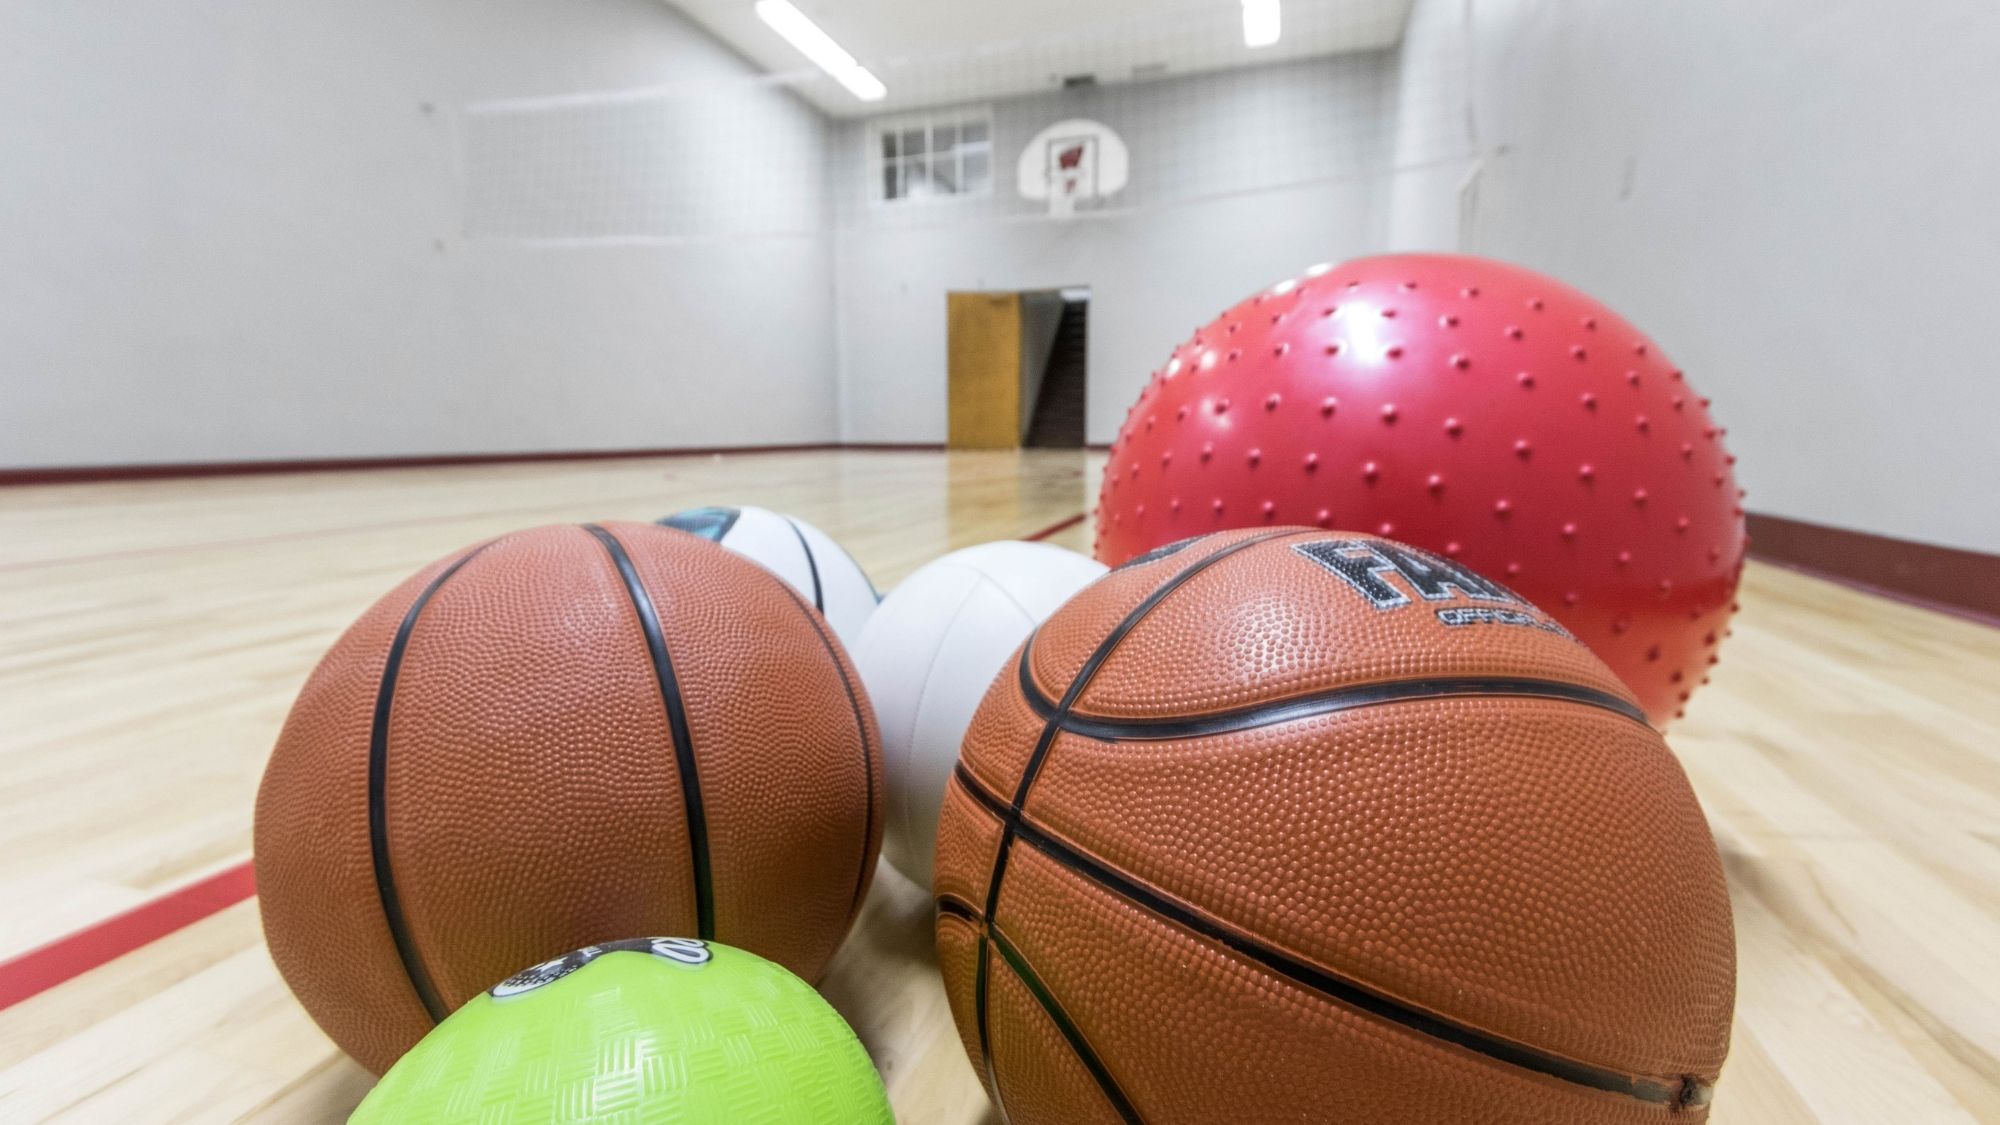 Basketballs at Preble Hills' indoor basketball court